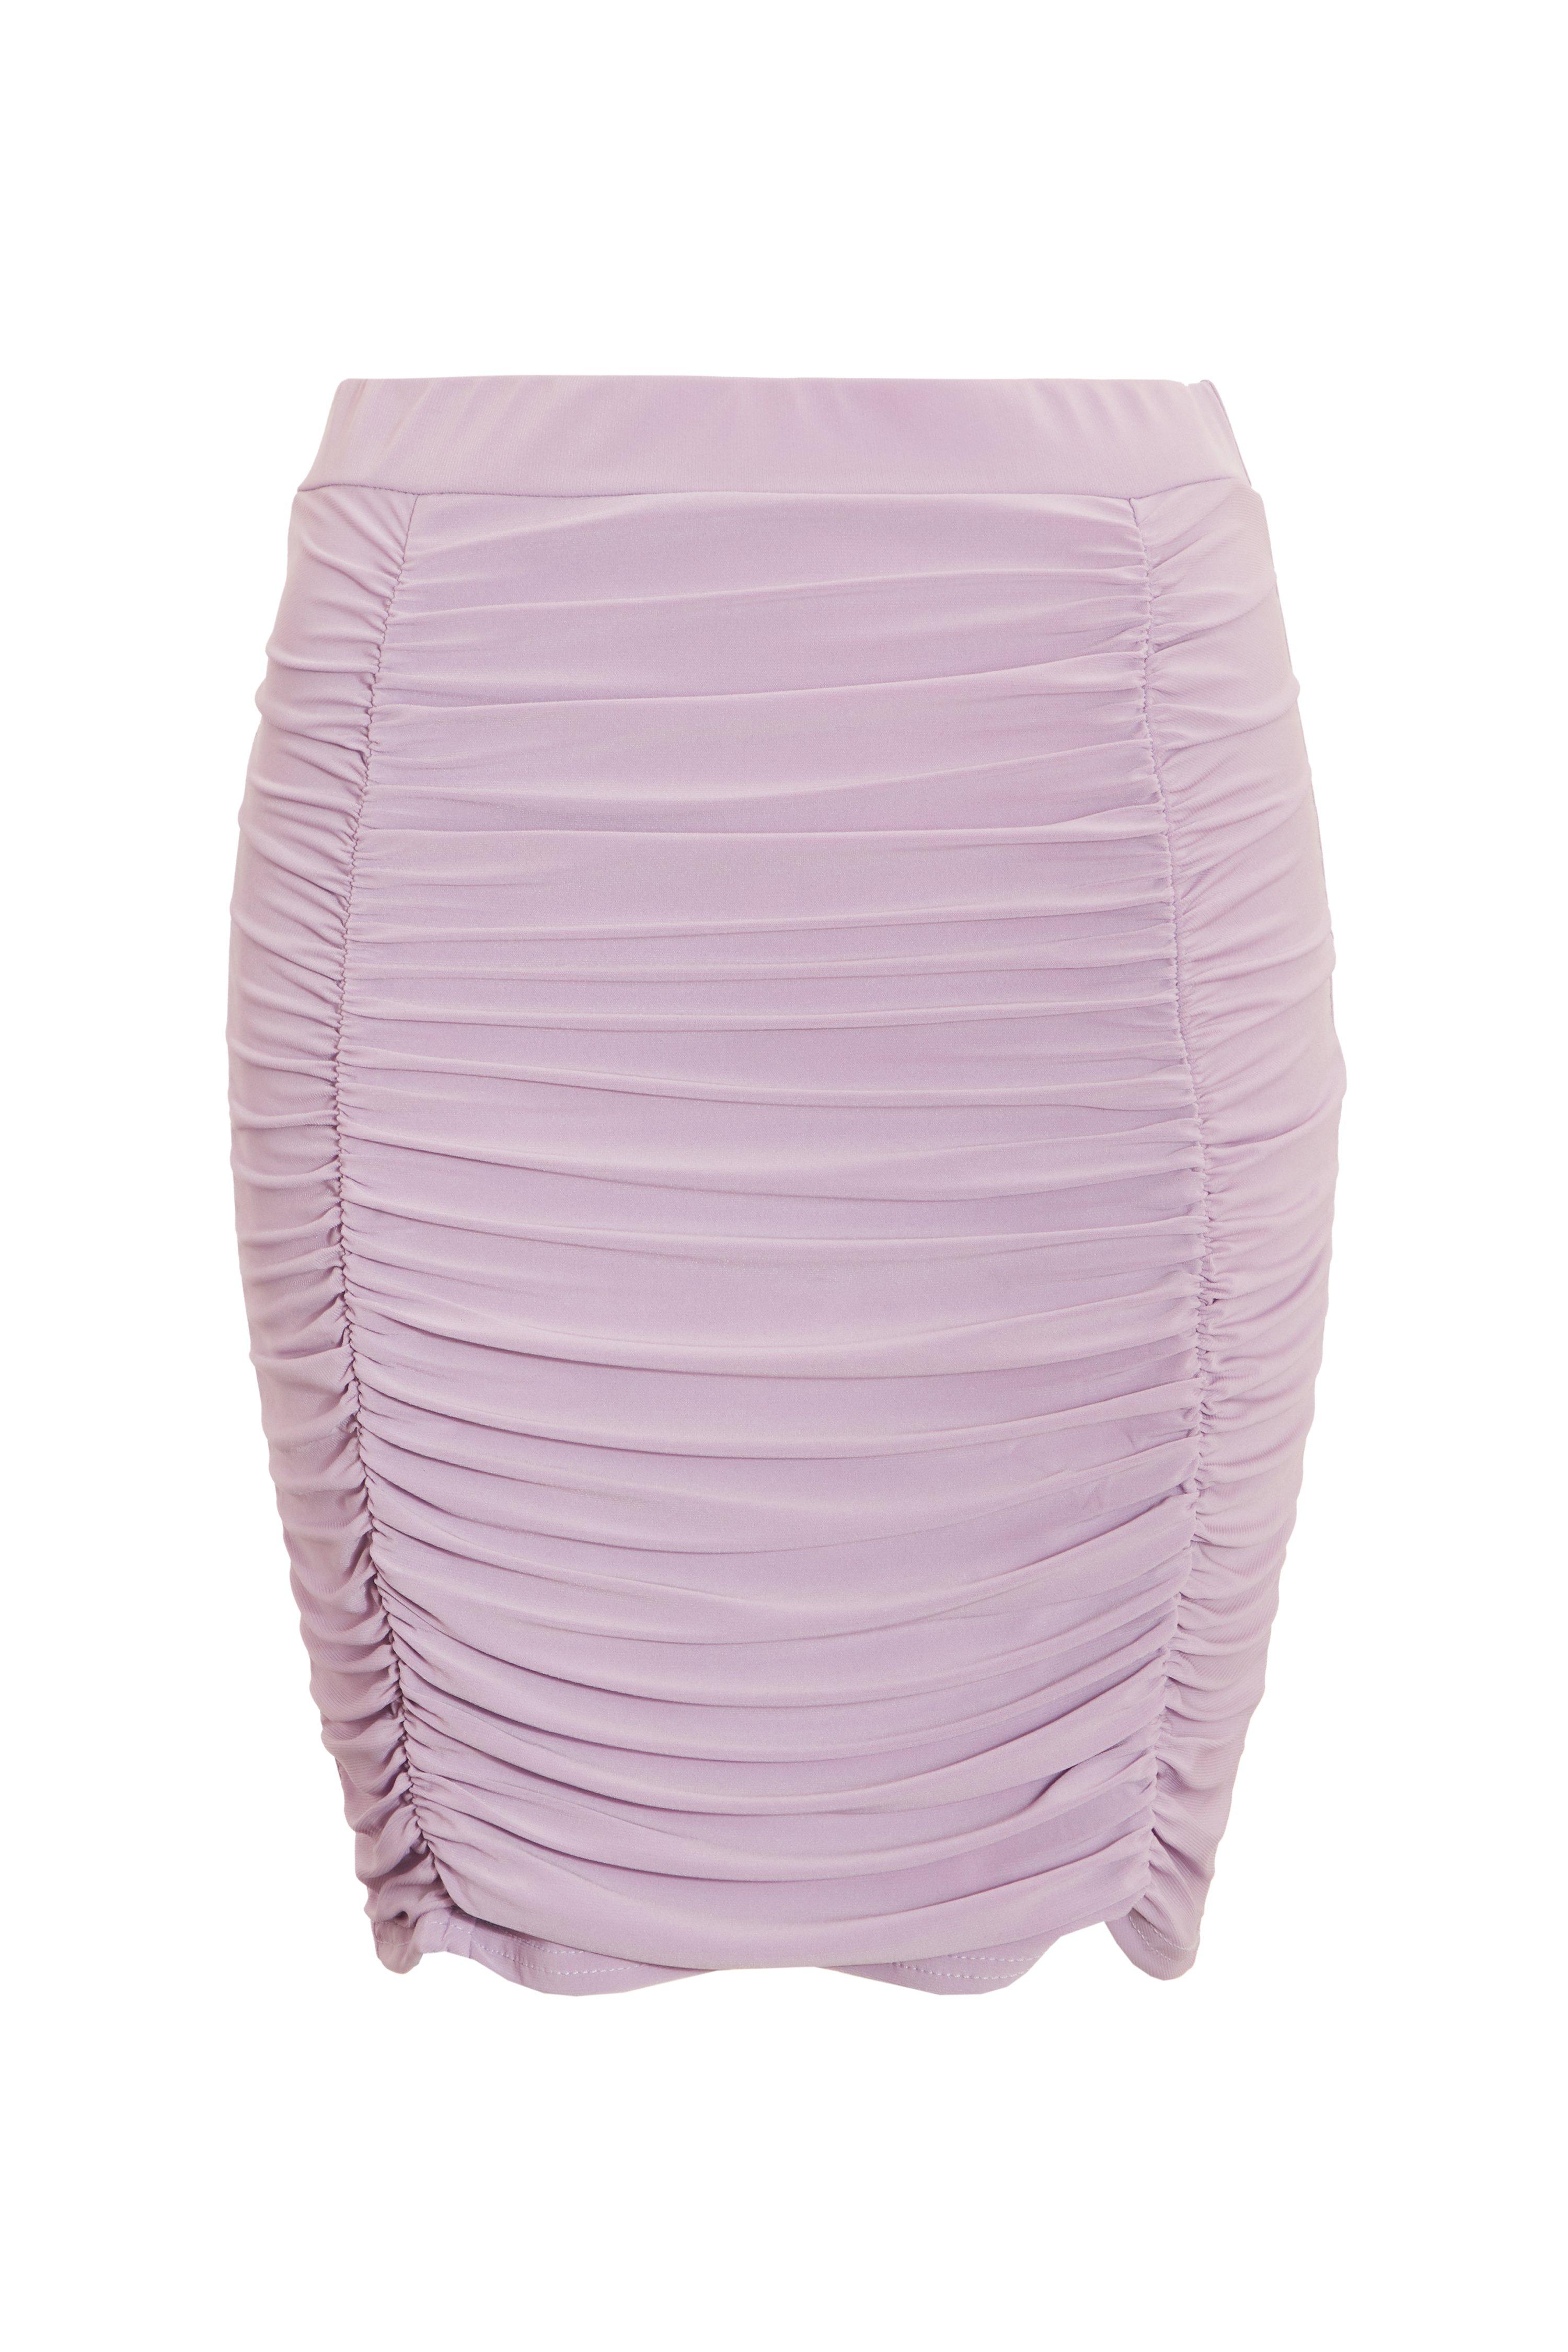 Lilac Ruched Mini Skirt - Quiz Clothing